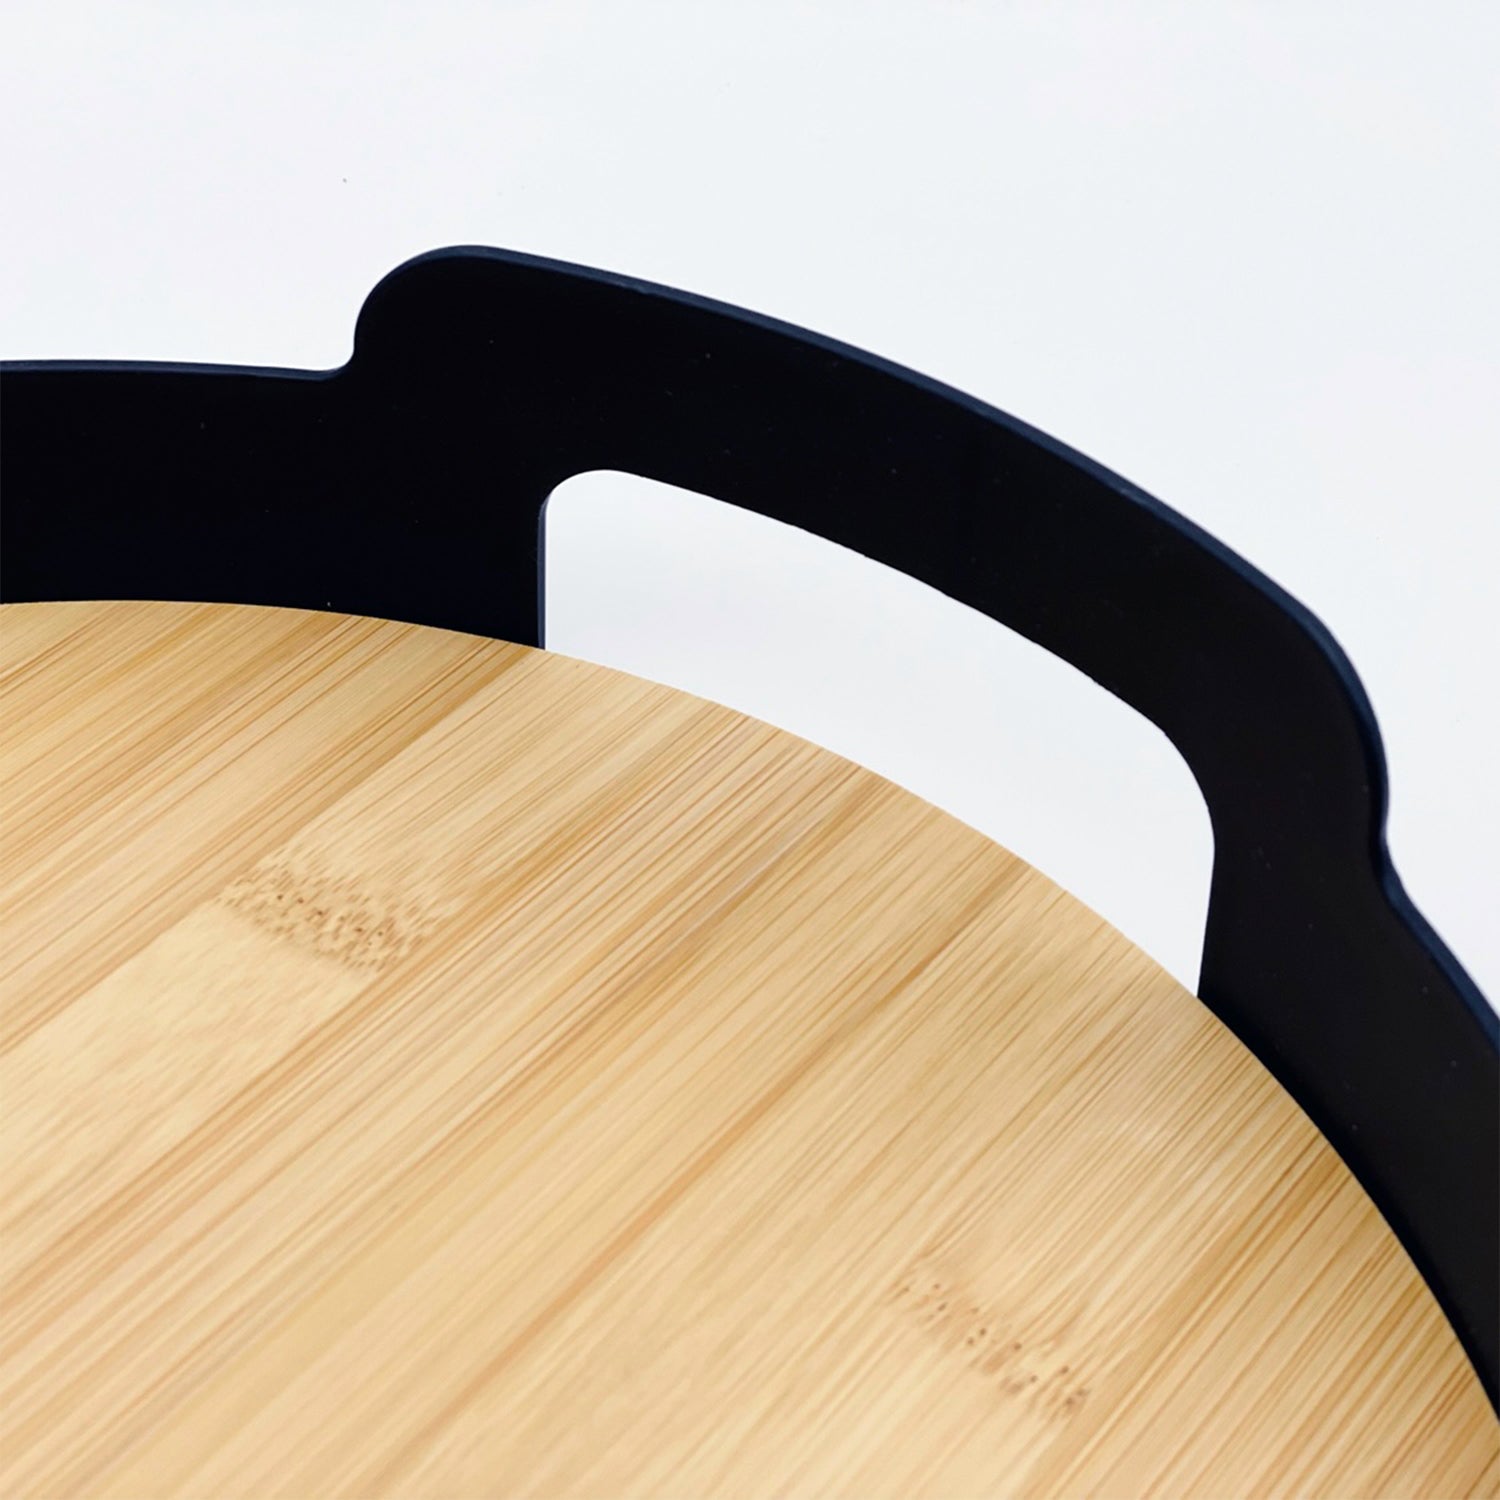 Versatile Circular Tray with Wood Base